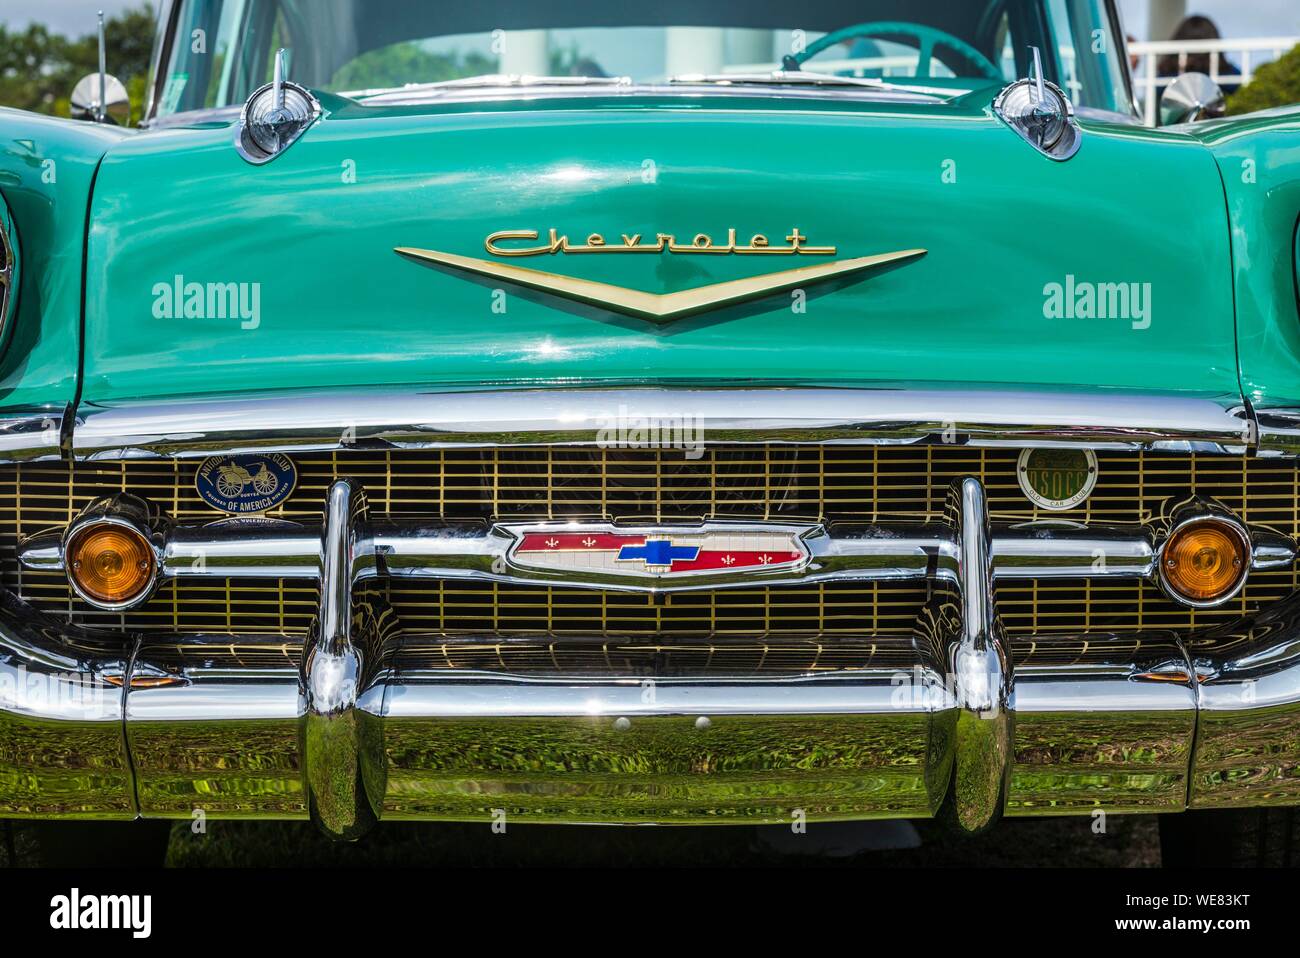 United States, New England, Massachusetts, Cape Ann, Gloucester, antique car, 1957 Chevrolet Bel Air Banque D'Images